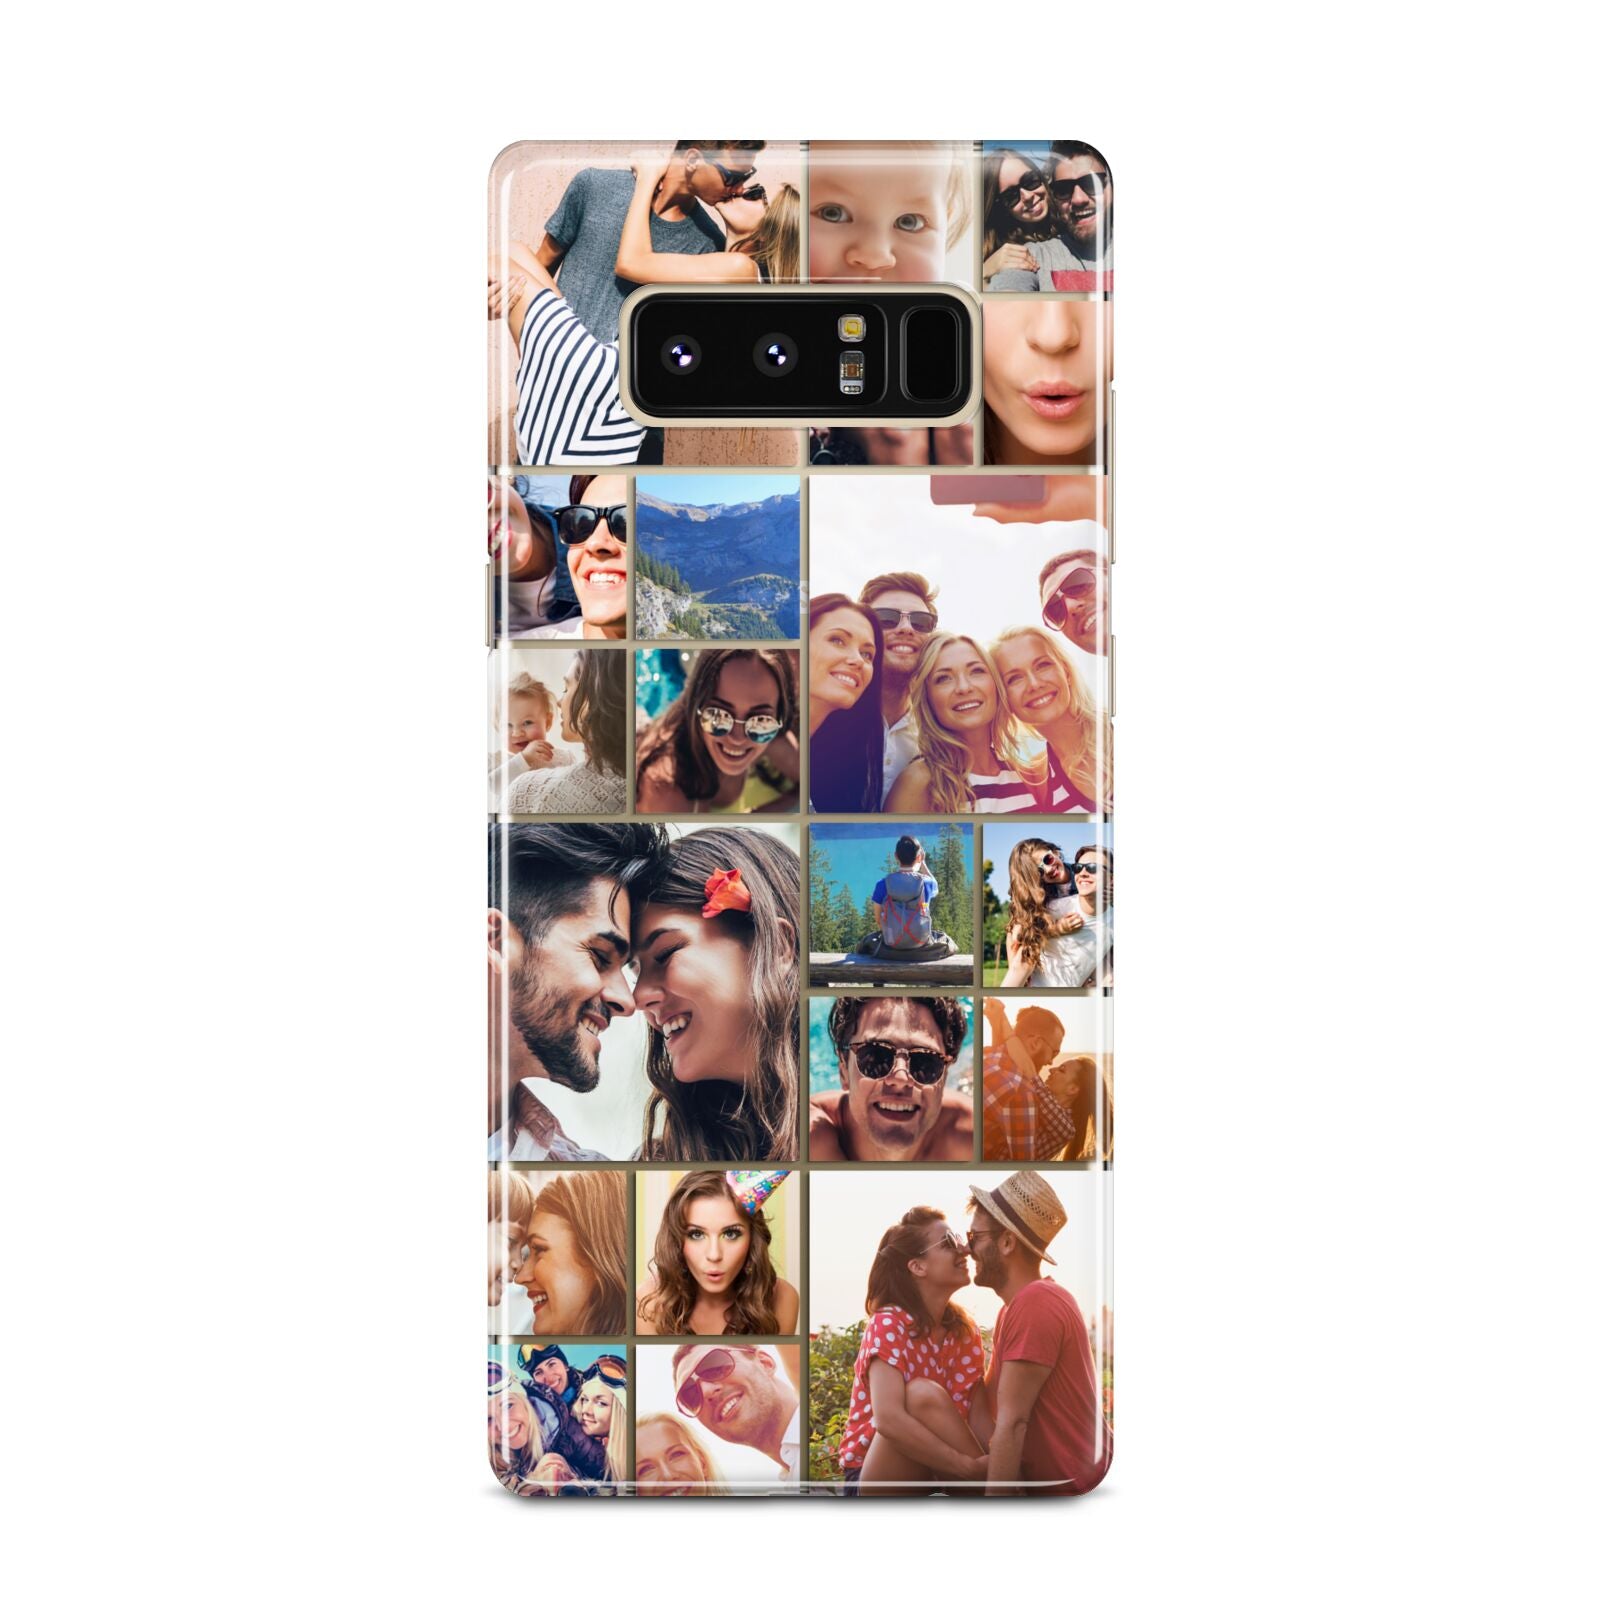 Photo Grid Samsung Galaxy Note 8 Case